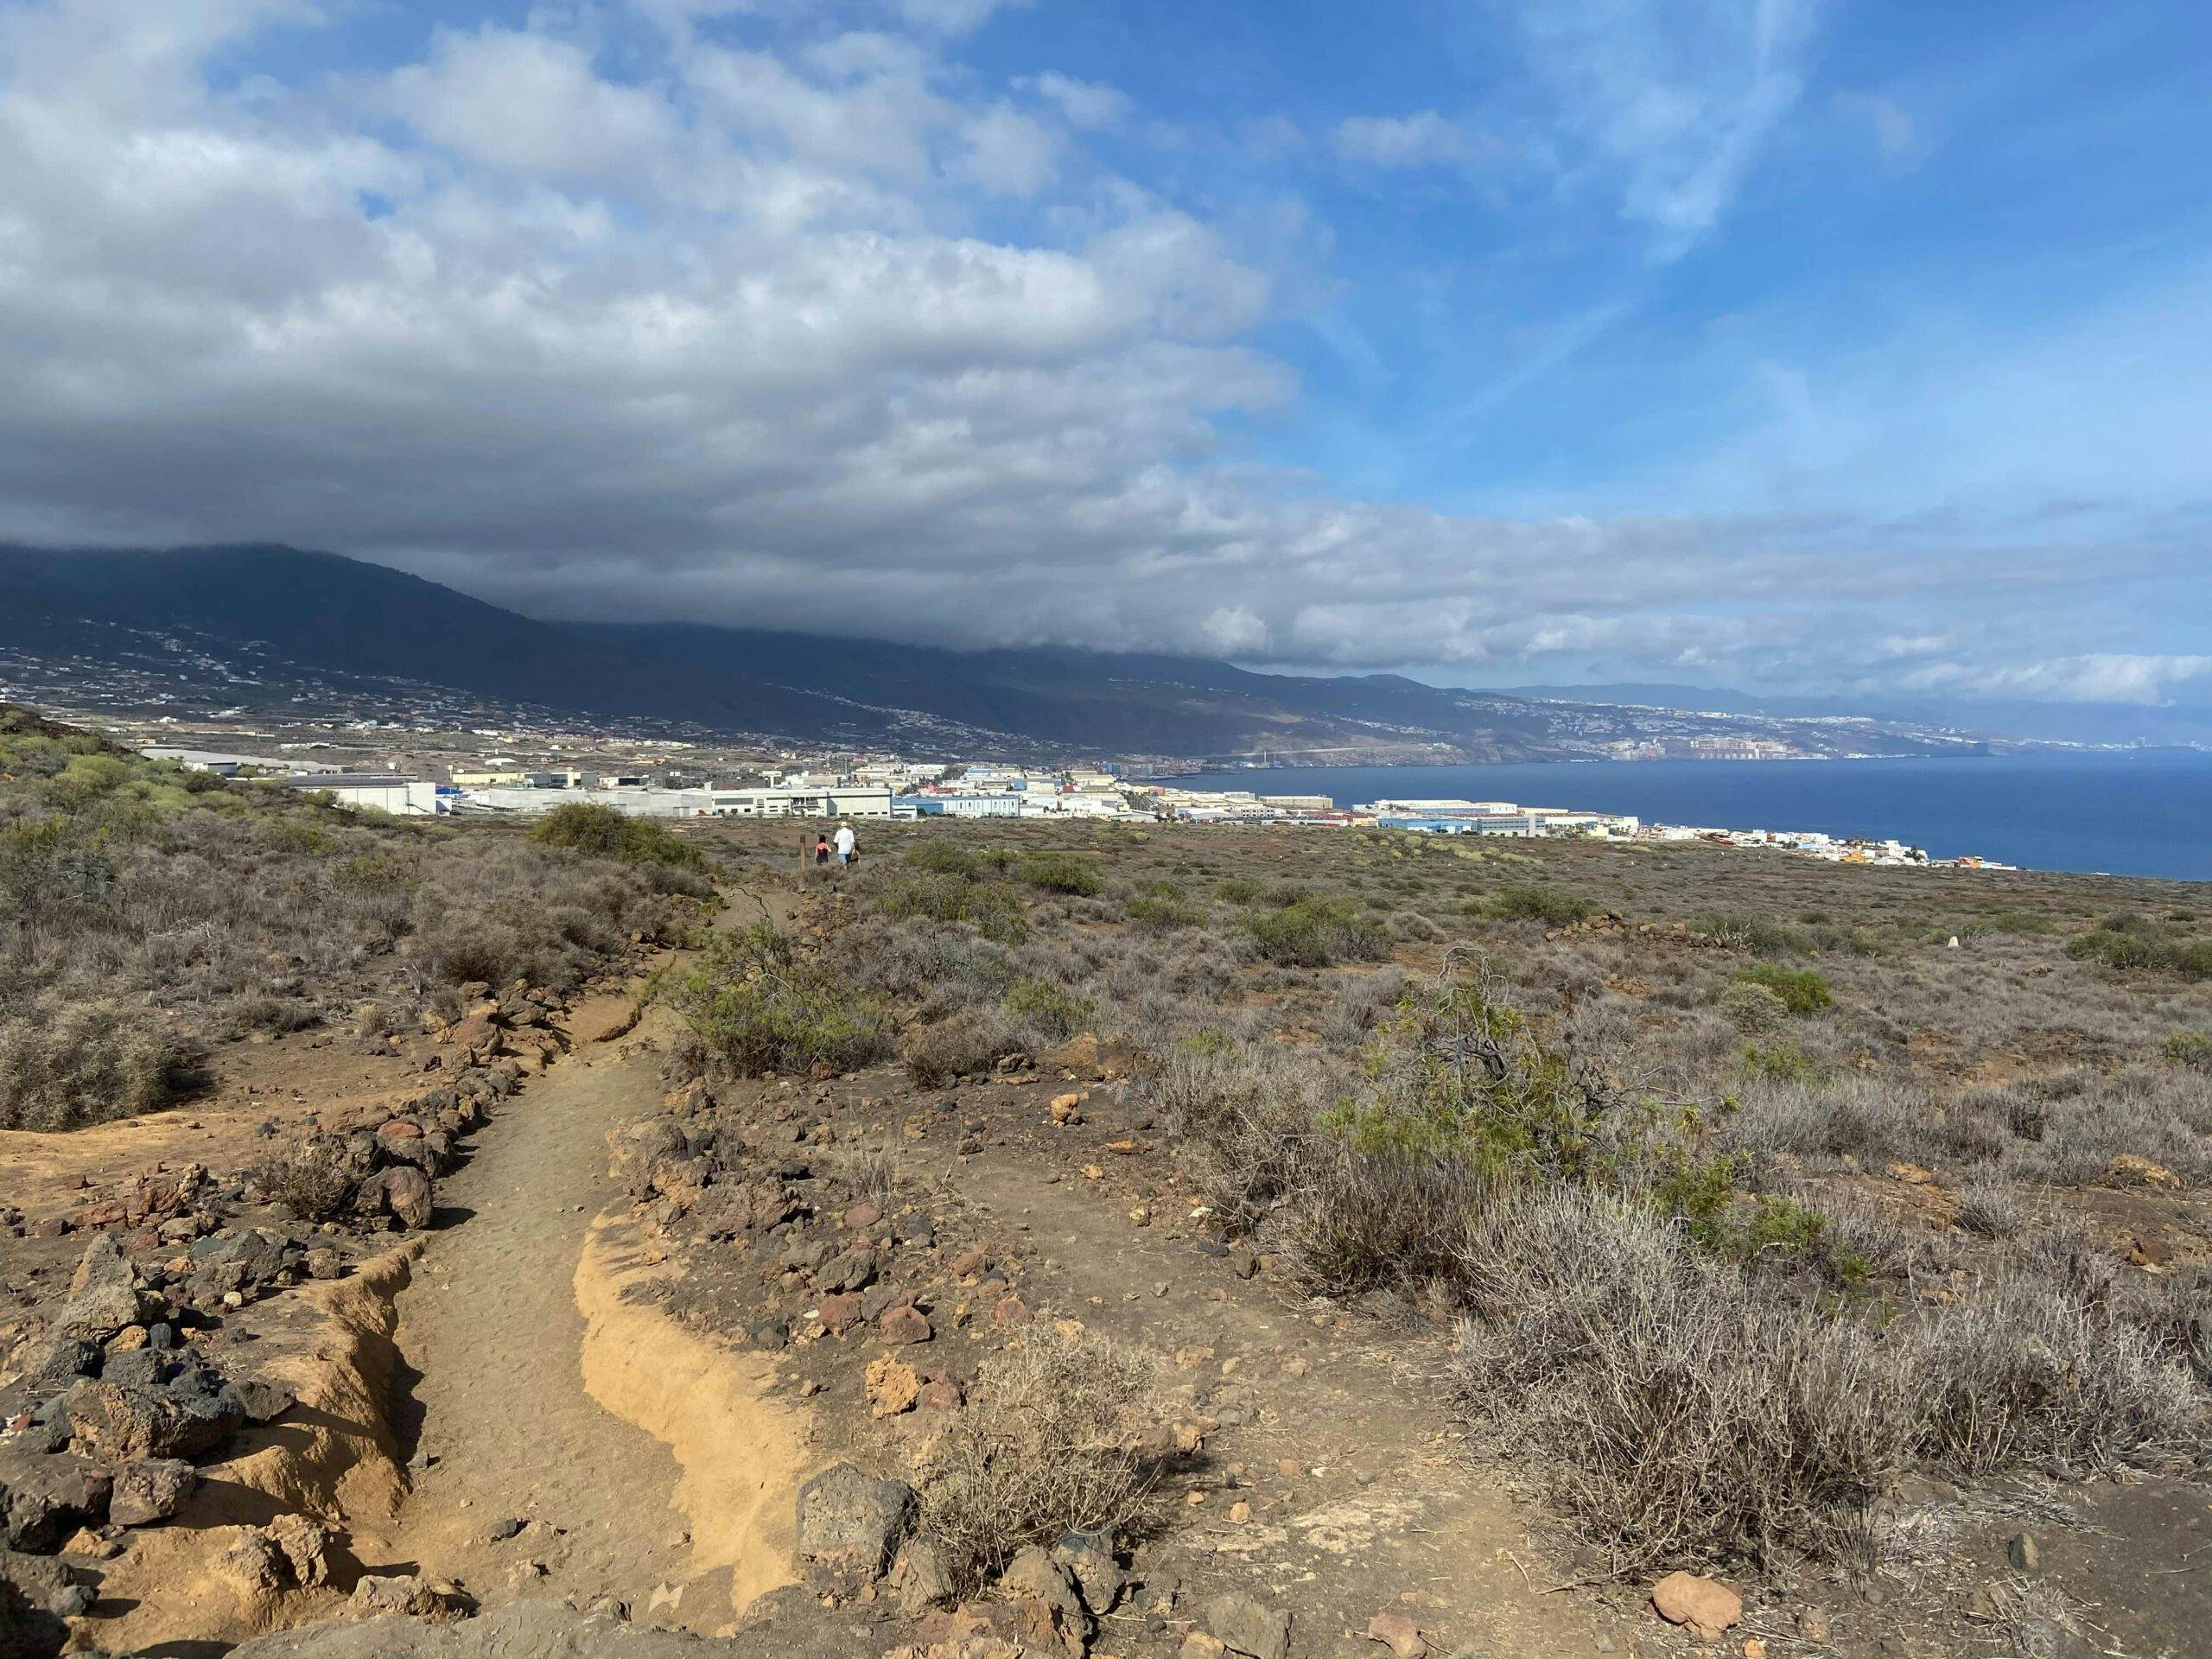 View of the coast towards Santa Cruz de Tenerife